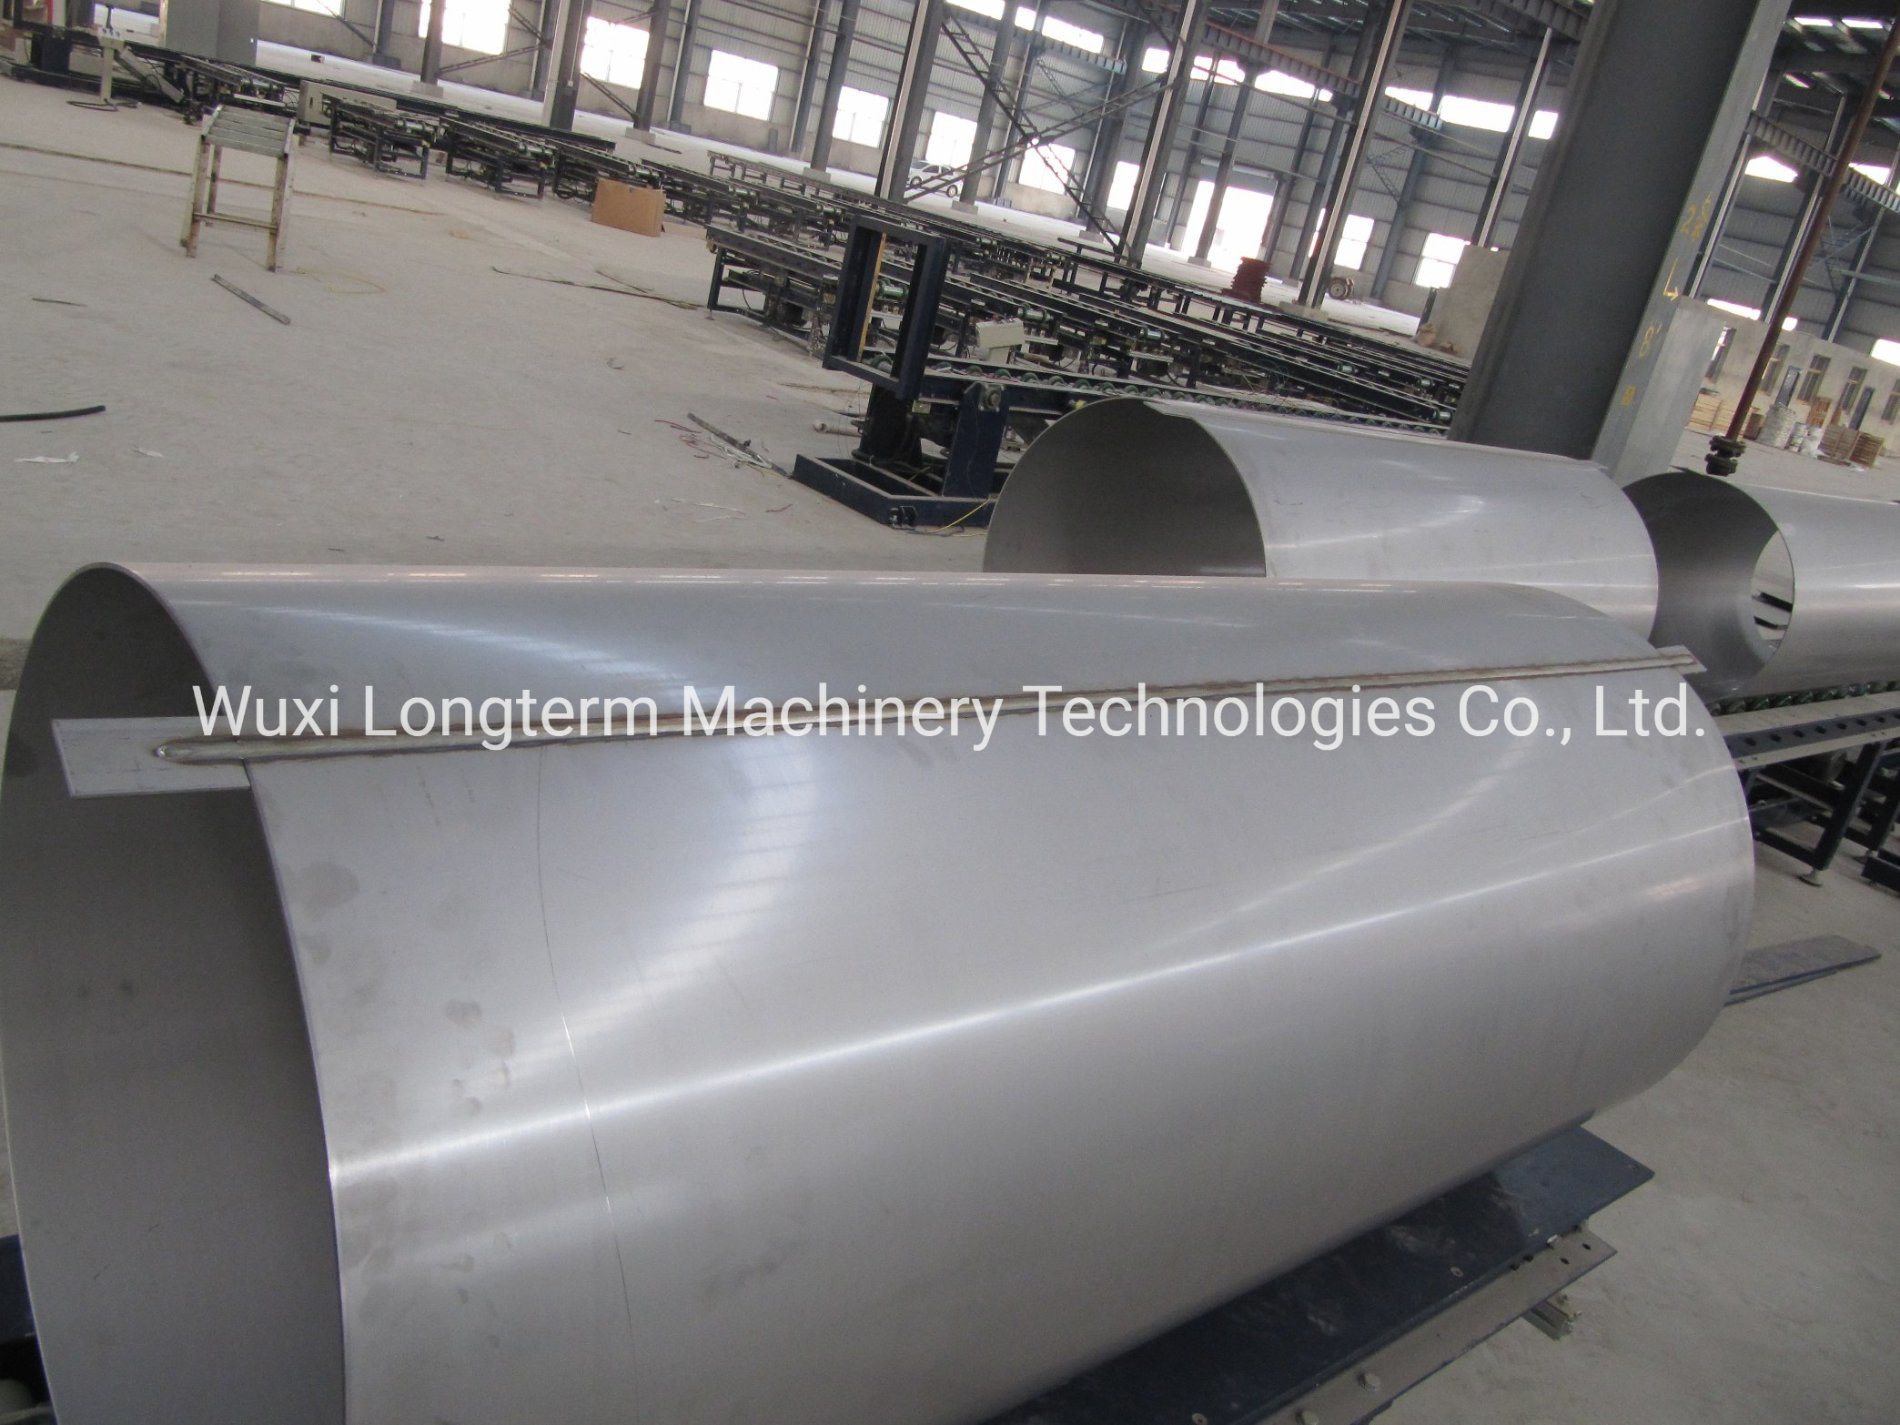 LNG Gas Inner Tank/Cylinder MIG Longitudinal Seam Welding Machine/ Equipment/ Seam Welder